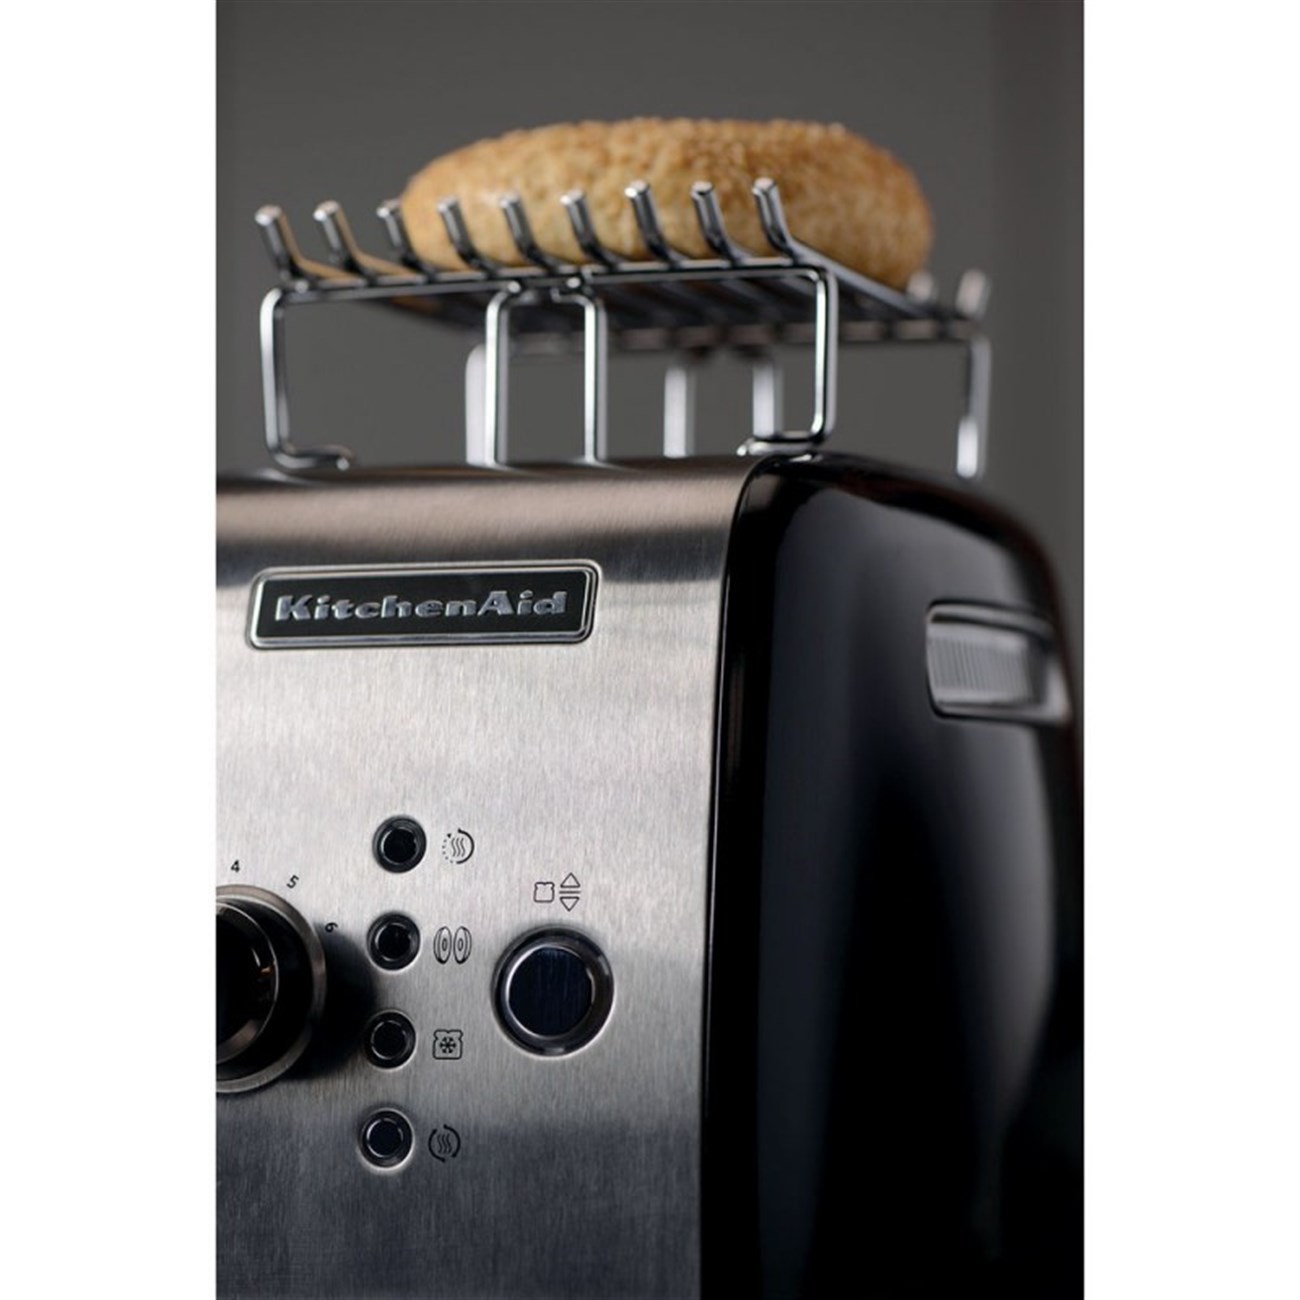 Kitchenaid 2 Dilim Ekmek Kızartma Makinesi - 5KMT221 Onyx Black